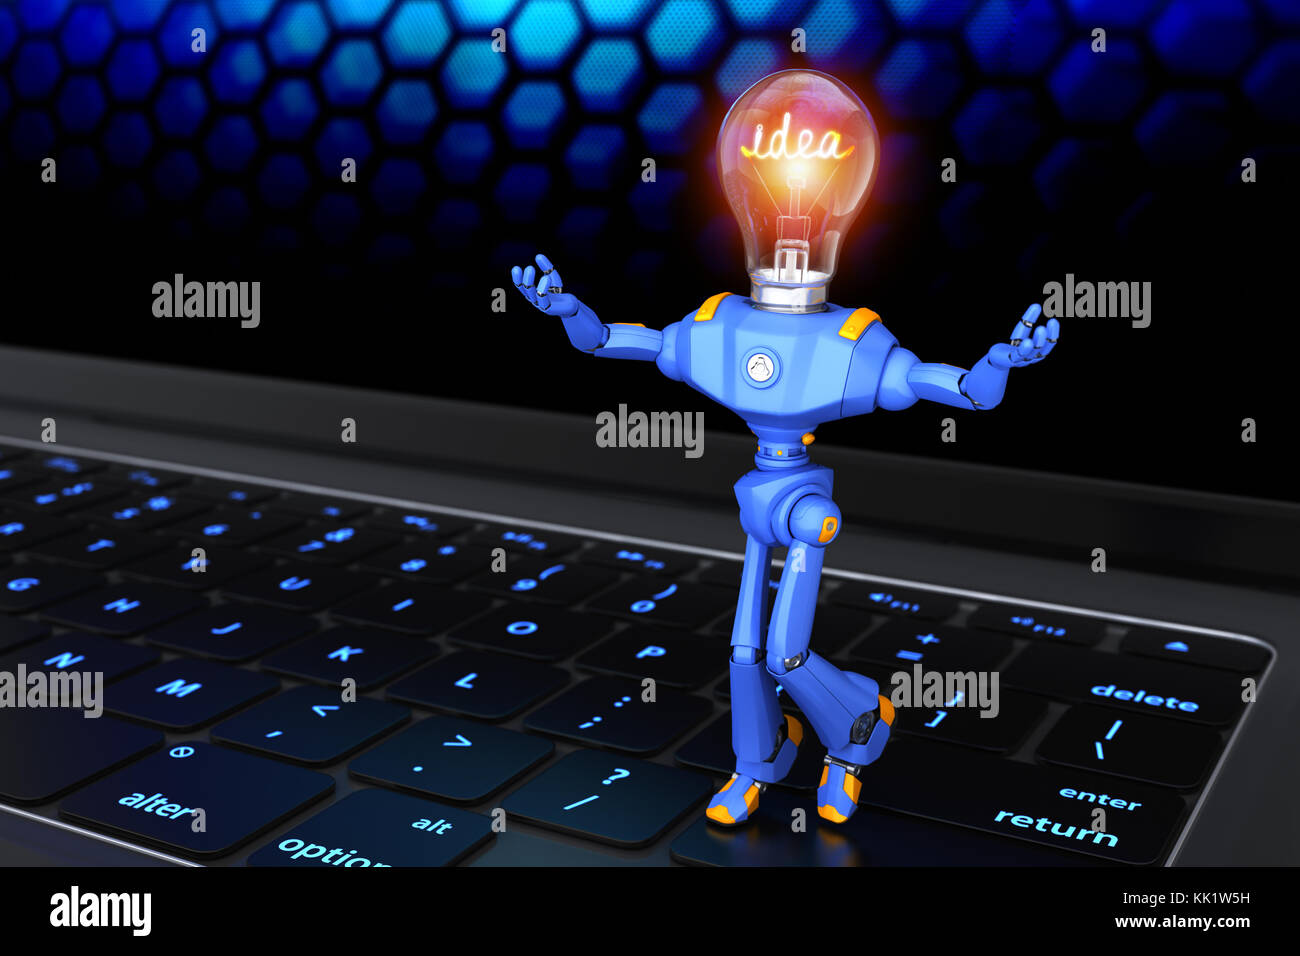 Little robot standing on keyboard. 3D illustration Stock Photo